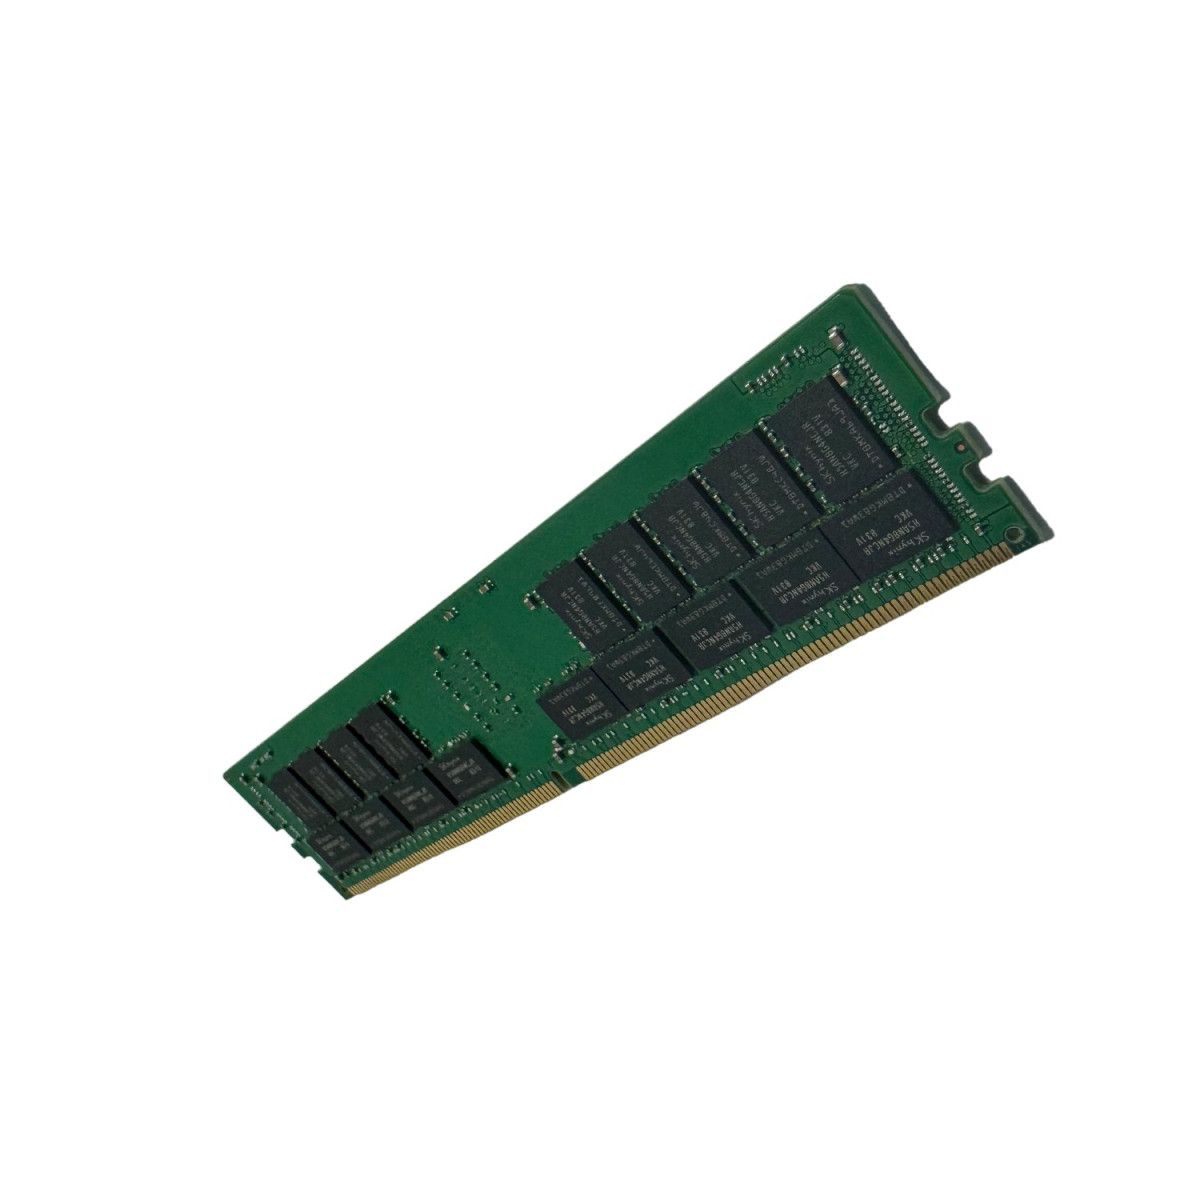 P05592-H21-MS - Memstar 1x 64GB DDR4-2666 RDIMM PC4-21300V-R - Memstar OEM compatibile Memoria 1 - Memstar 